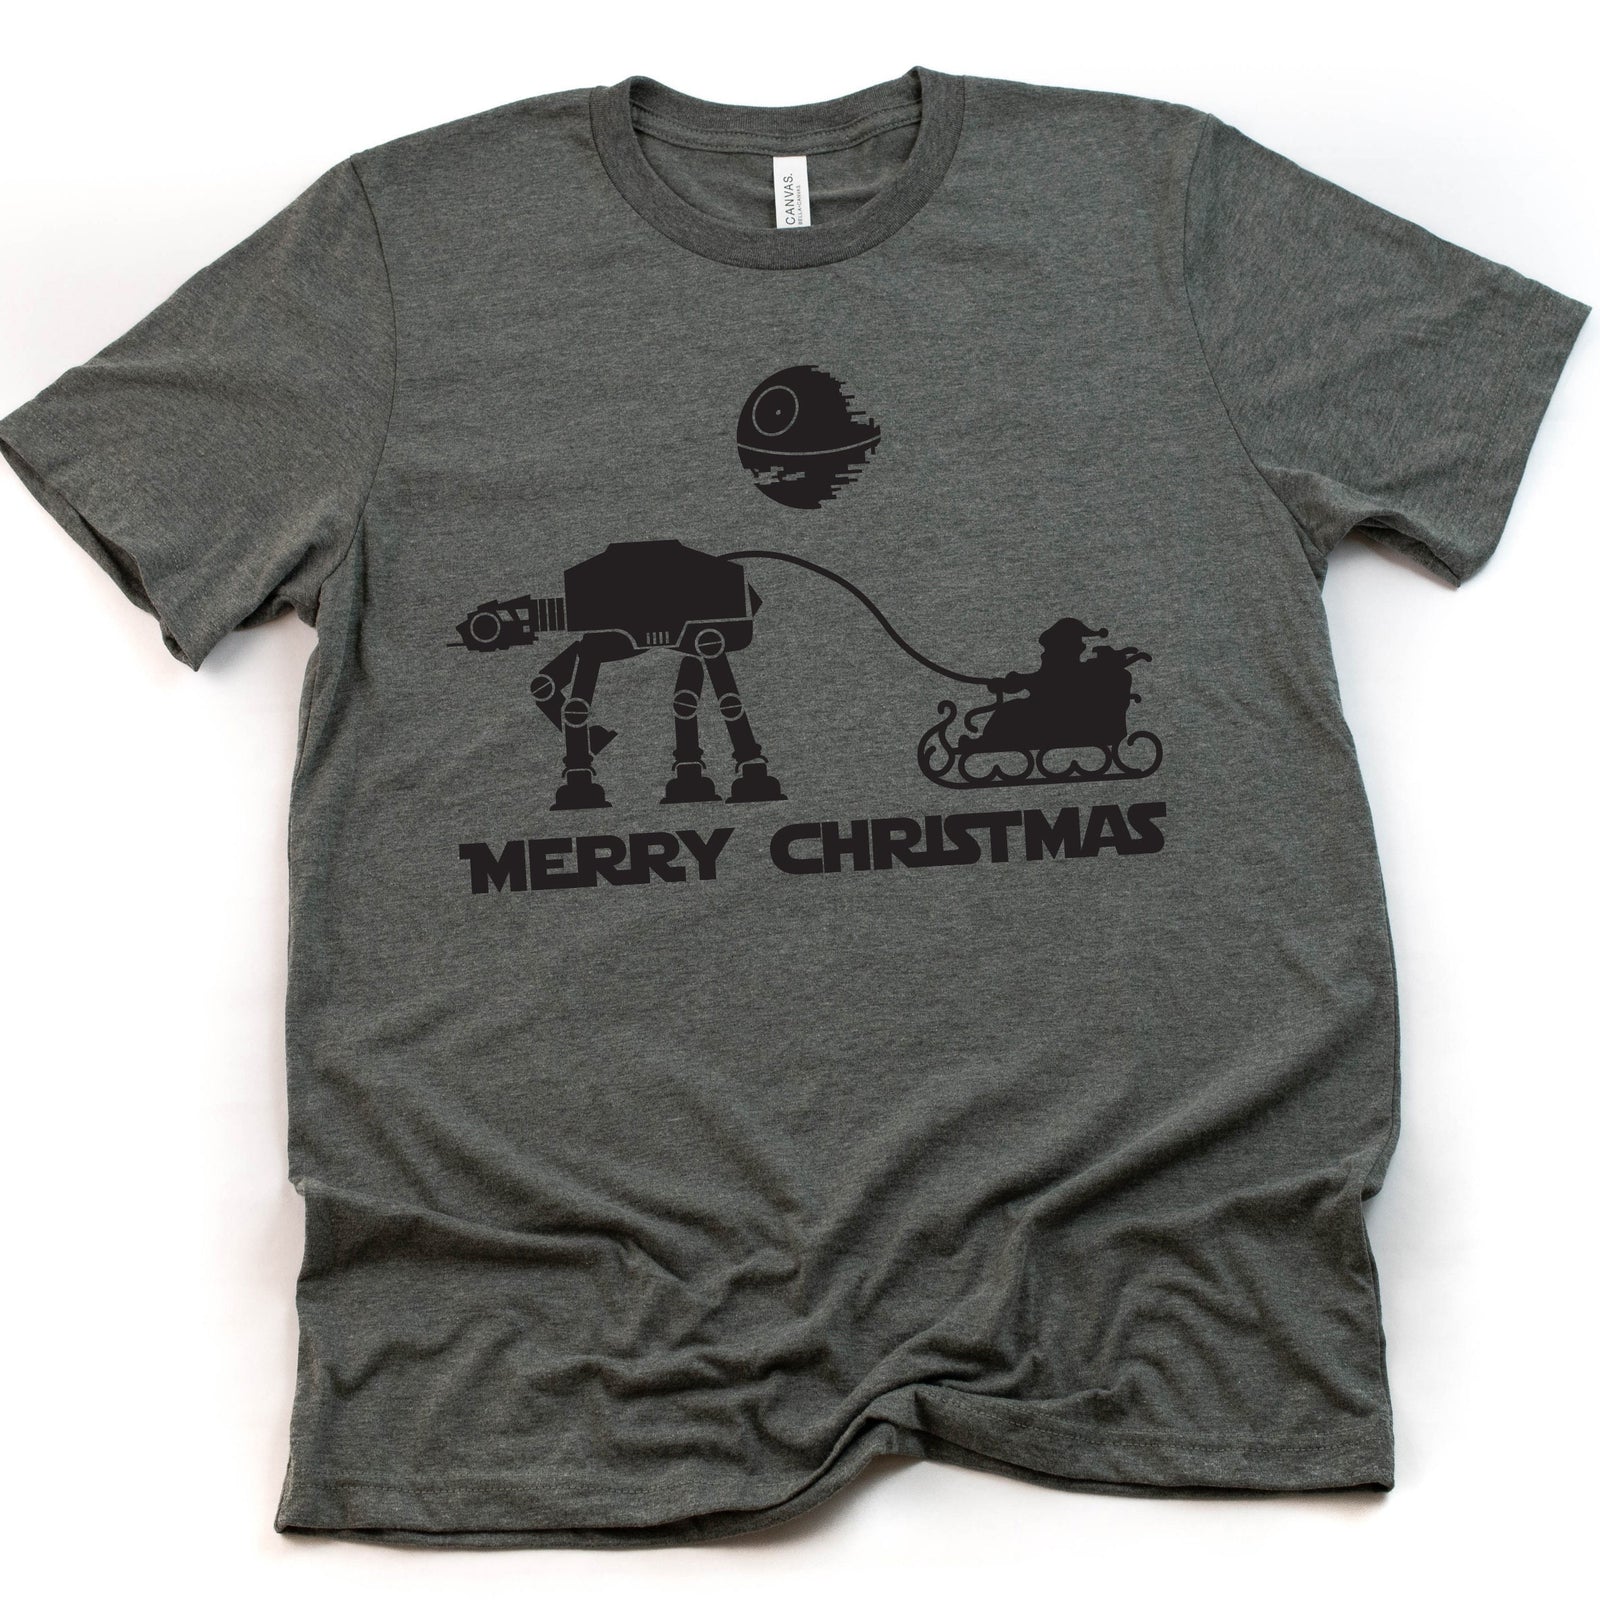 Merry Christmas T Shirt - Darth Vader Christmas T Shirt - Disney Star Wars Holiday T-shirt - Star Wars Fan Gift - Star Wars  Holiday Shirt